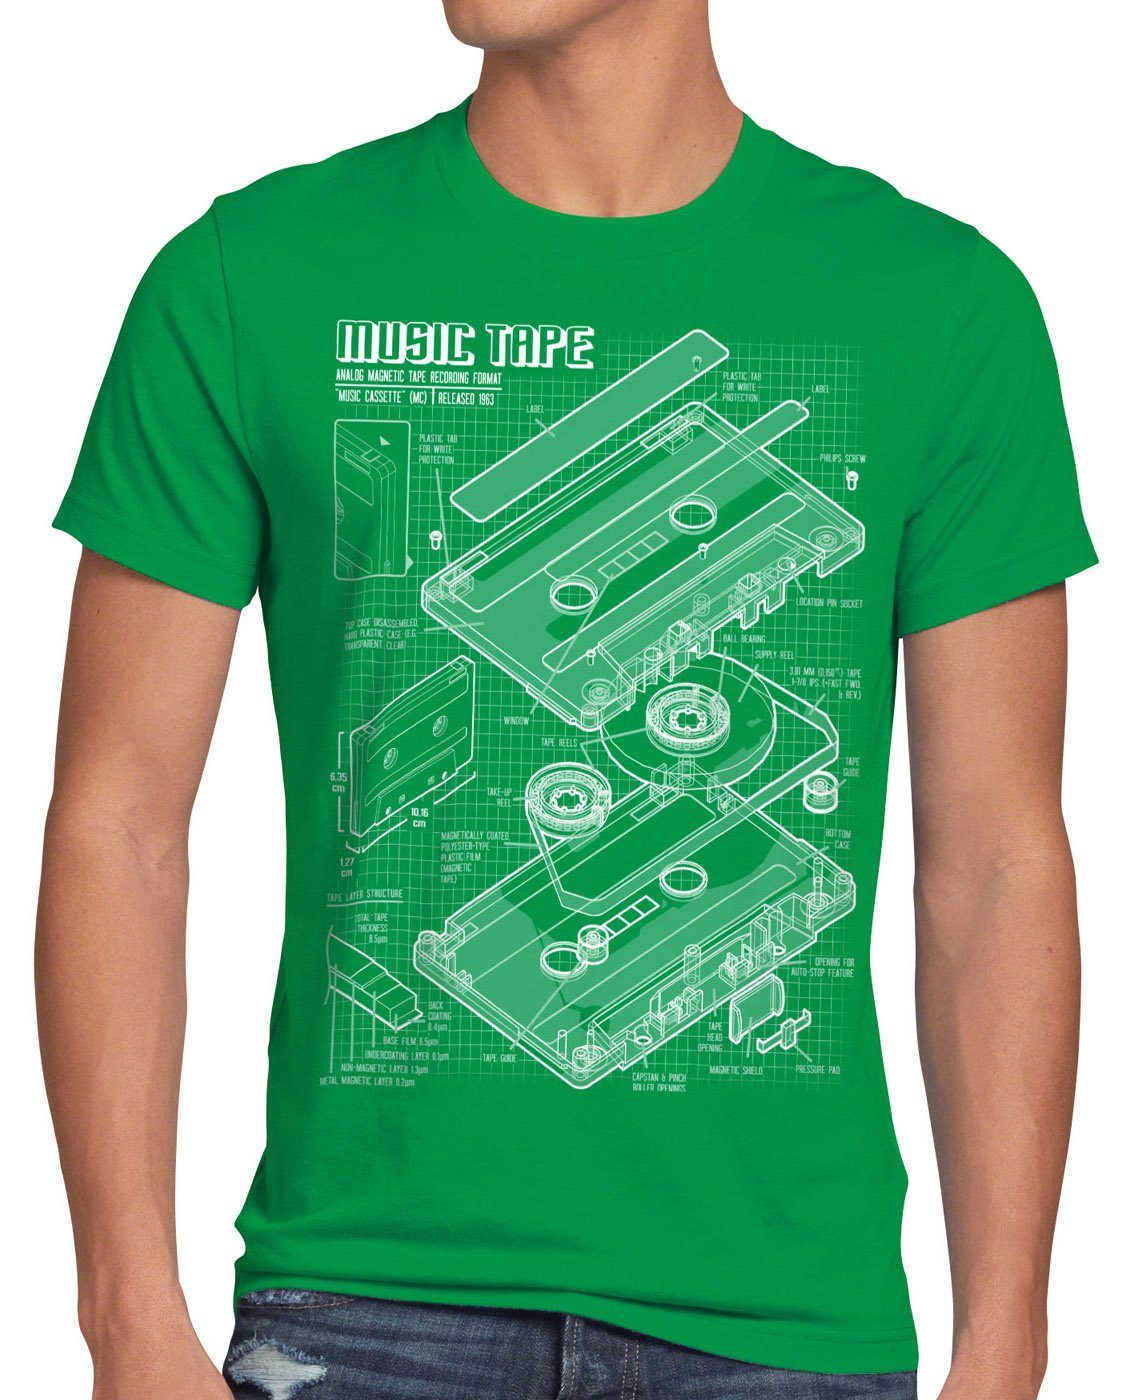 style3 Print-Shirt Herren T-Shirt TAPE Kassette disko MC DJ retro musik turntable ndw analog disco grün